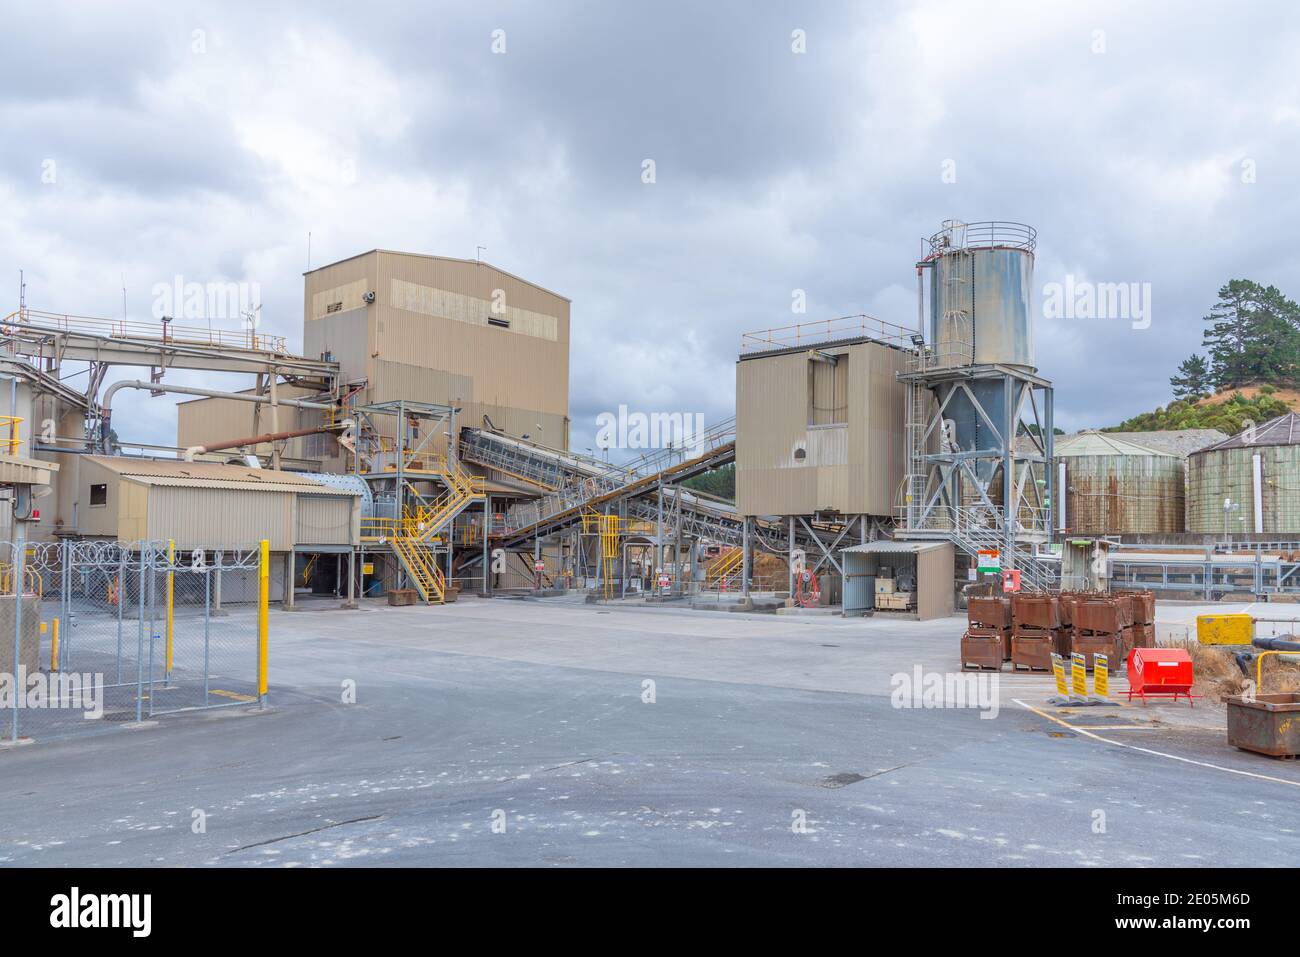 WAIHI, NEW ZEALAND, FEBRUARY 16, 2020: Ore processing plant at Waihi, New Zealand Stock Photo